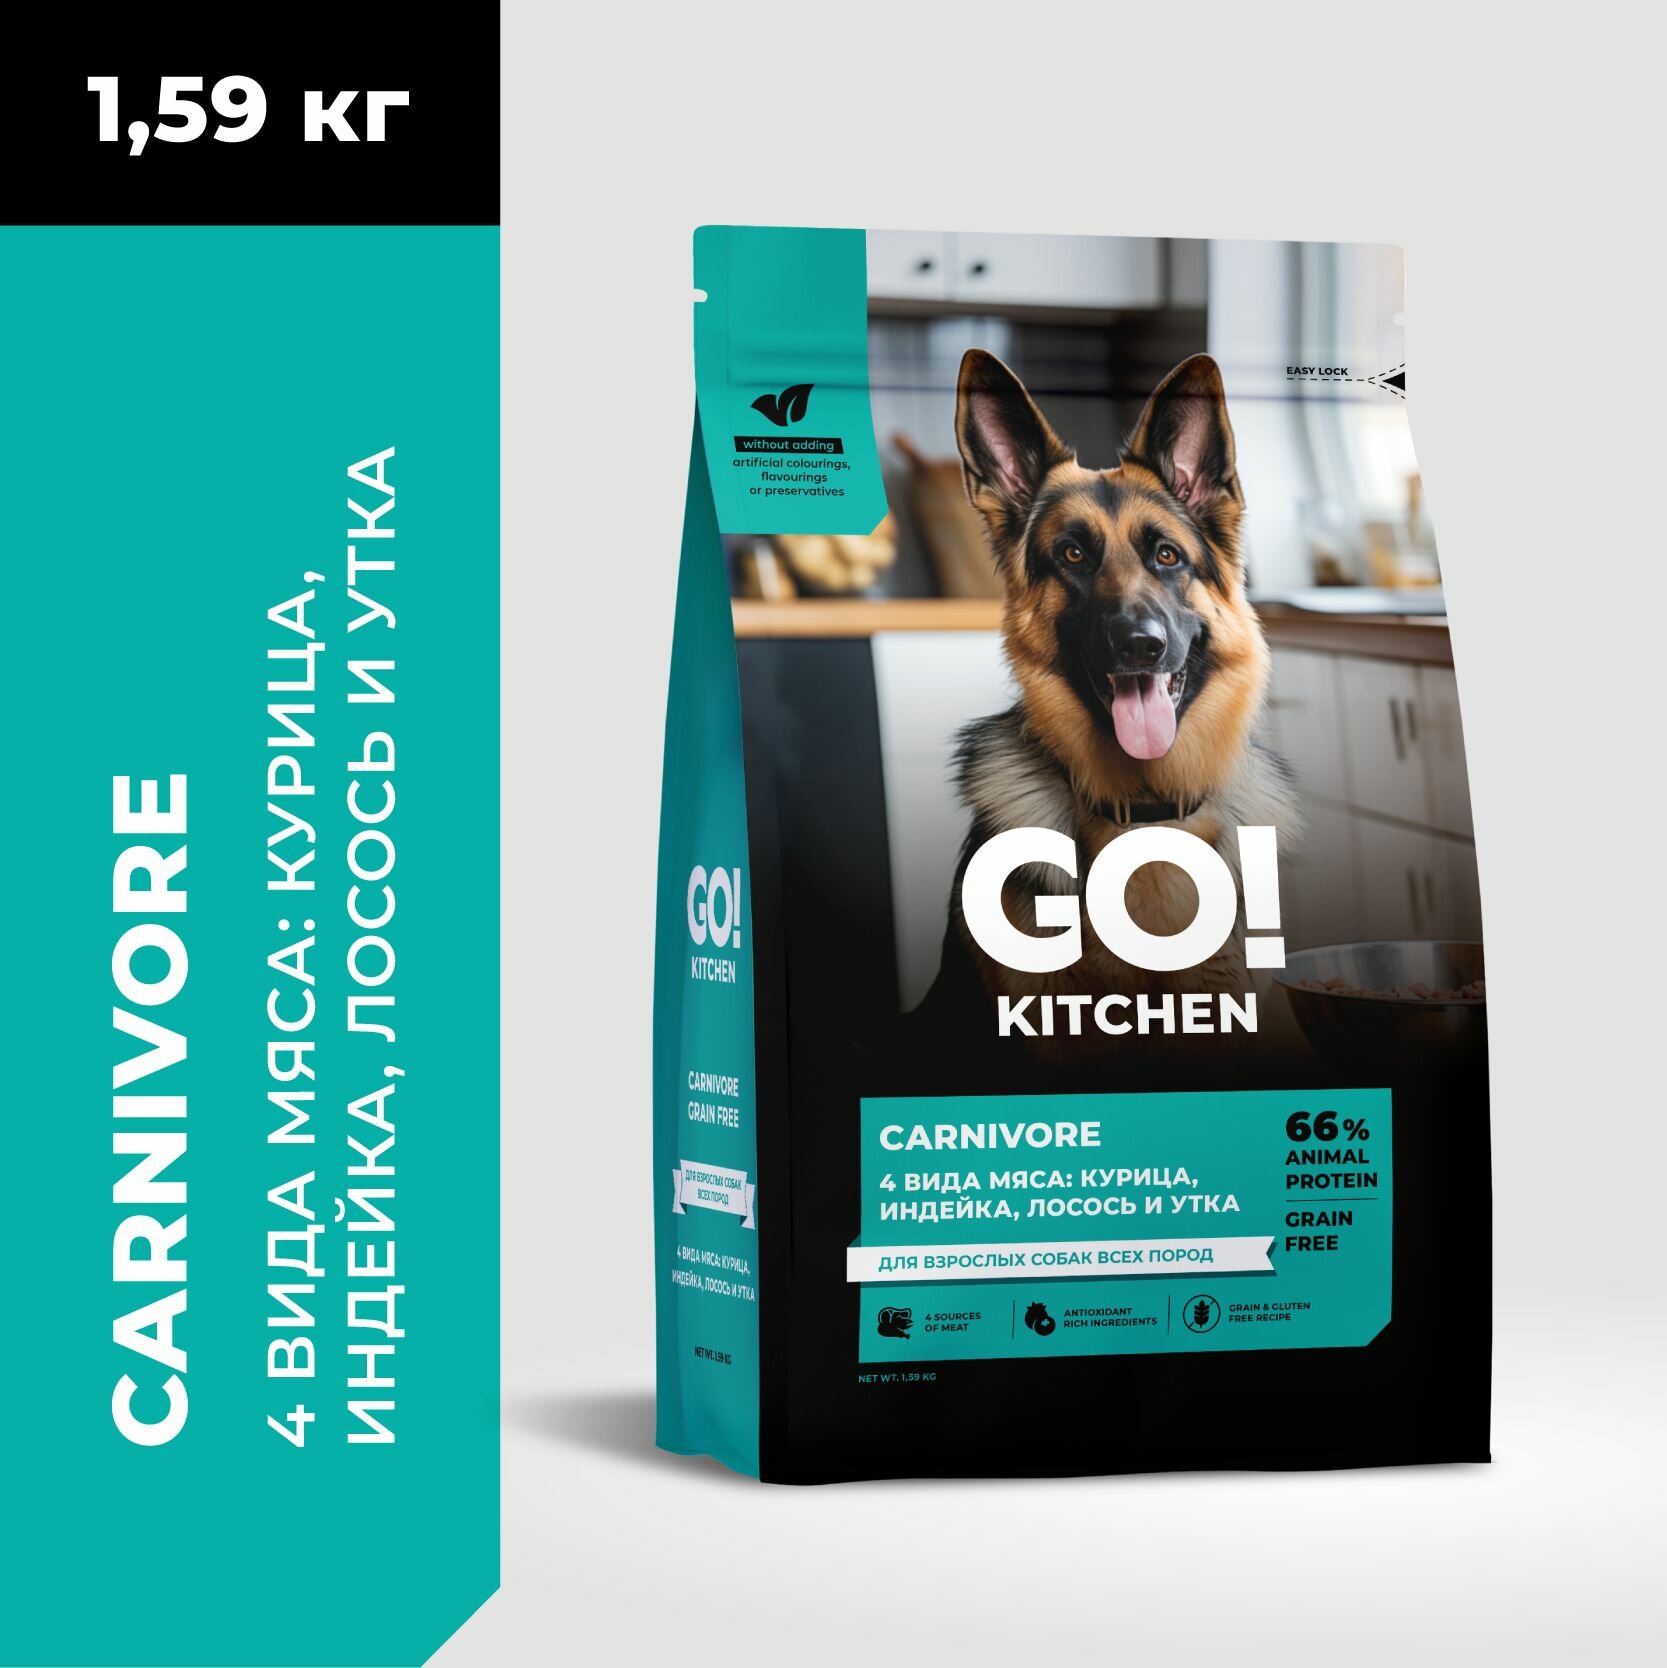 Go! Kitchen Carnivore Grain Free - Сухой корм для собак 4 вида мяса, с курицей, индейкой, уткой и лососем (1.59 кг)